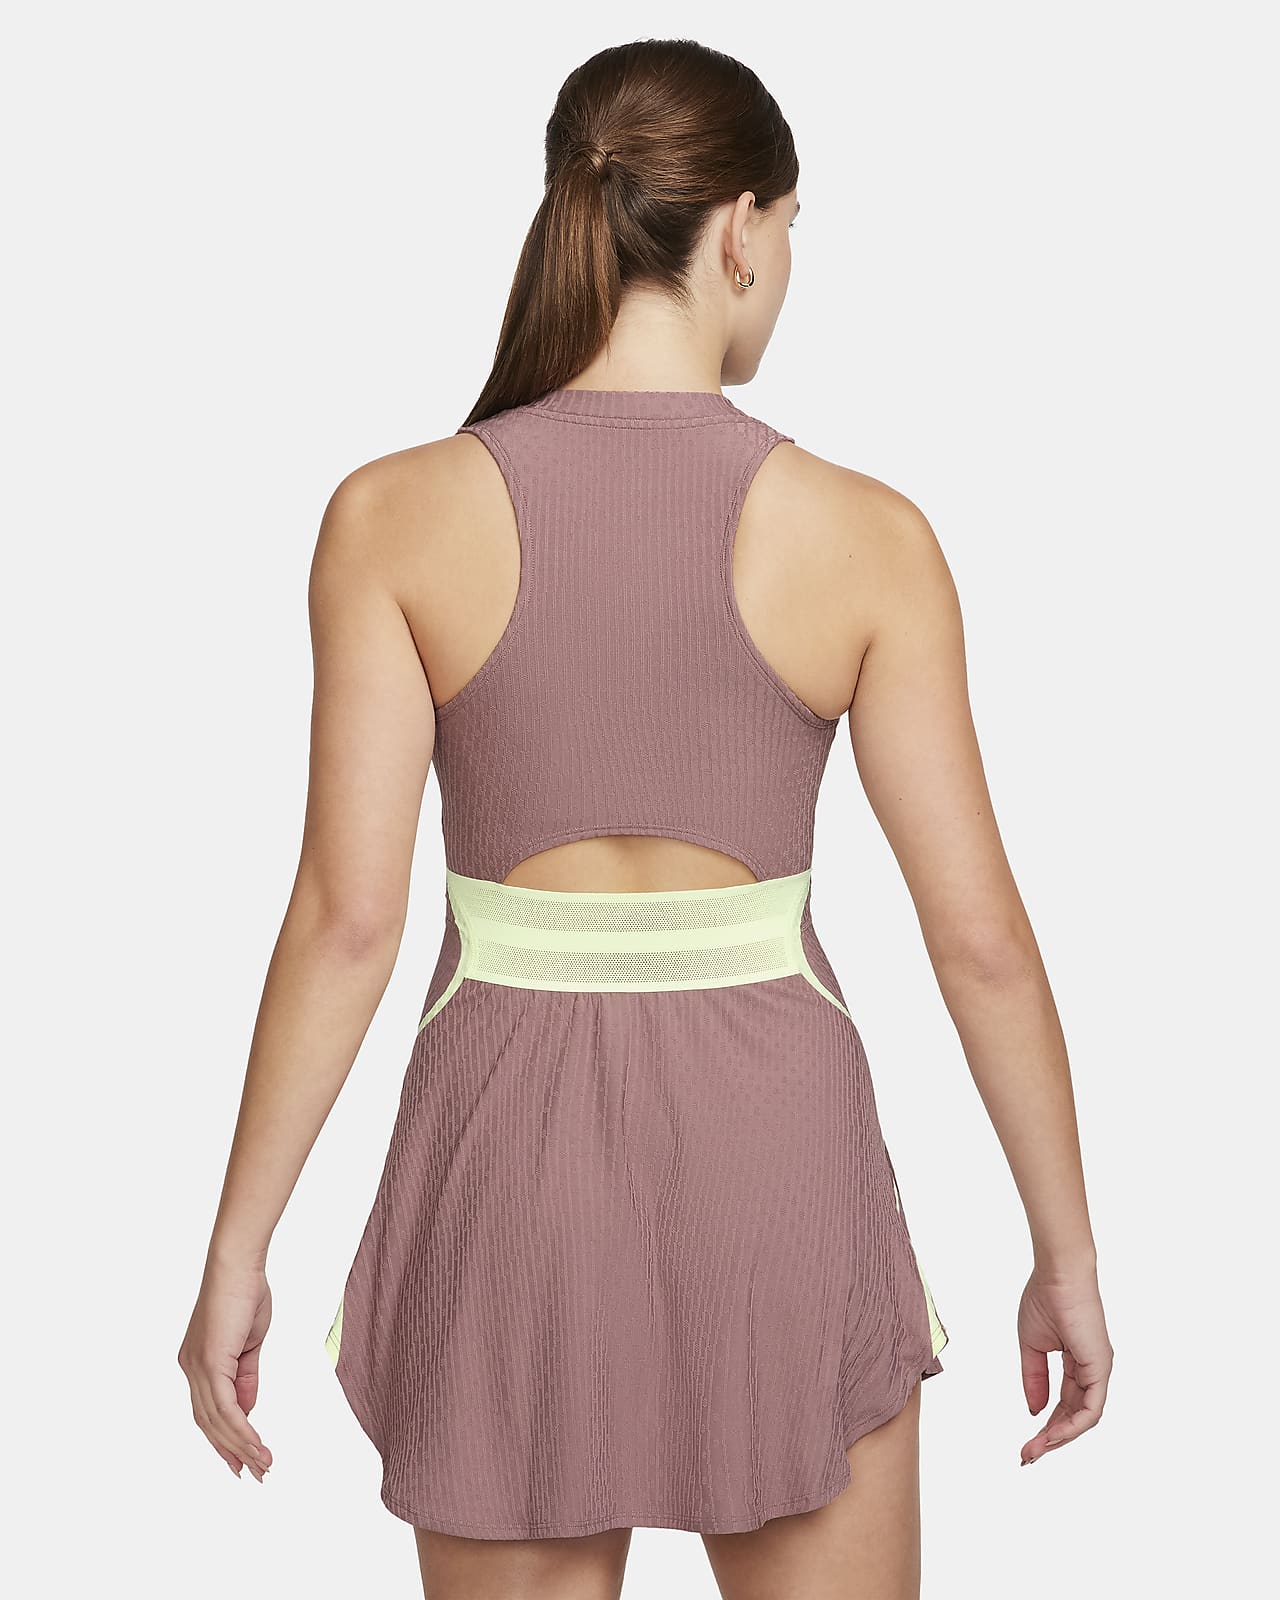 Nike Women's Smash Statement Tank Neo Turquoise 426023-424 - The Tennis Shop